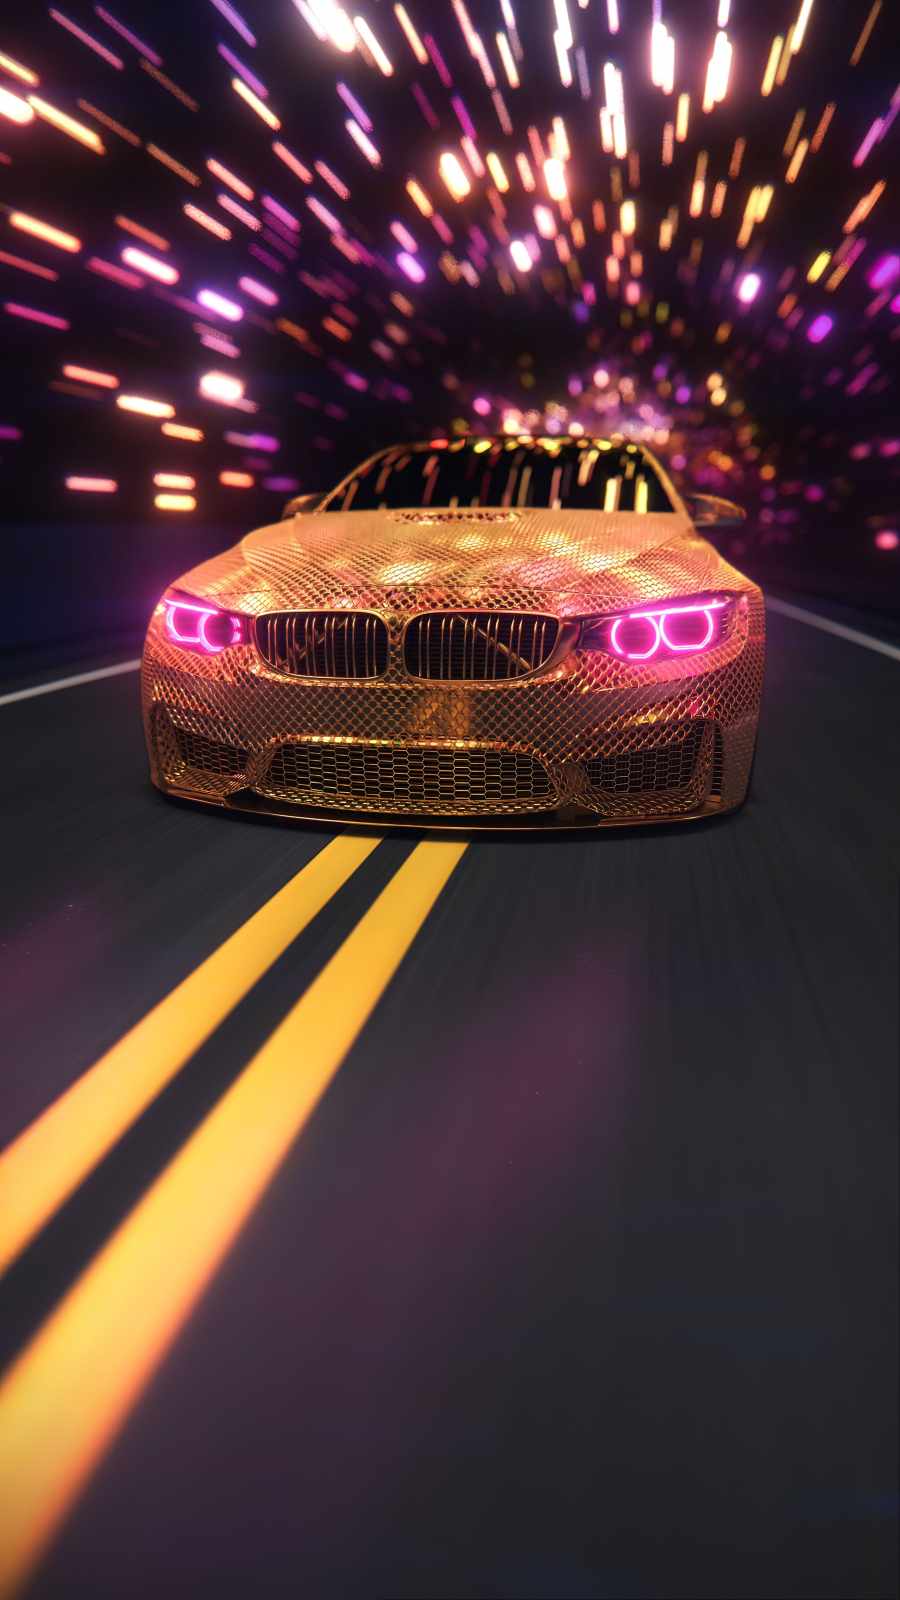 BMW Car Gold iPhone Wallpaper